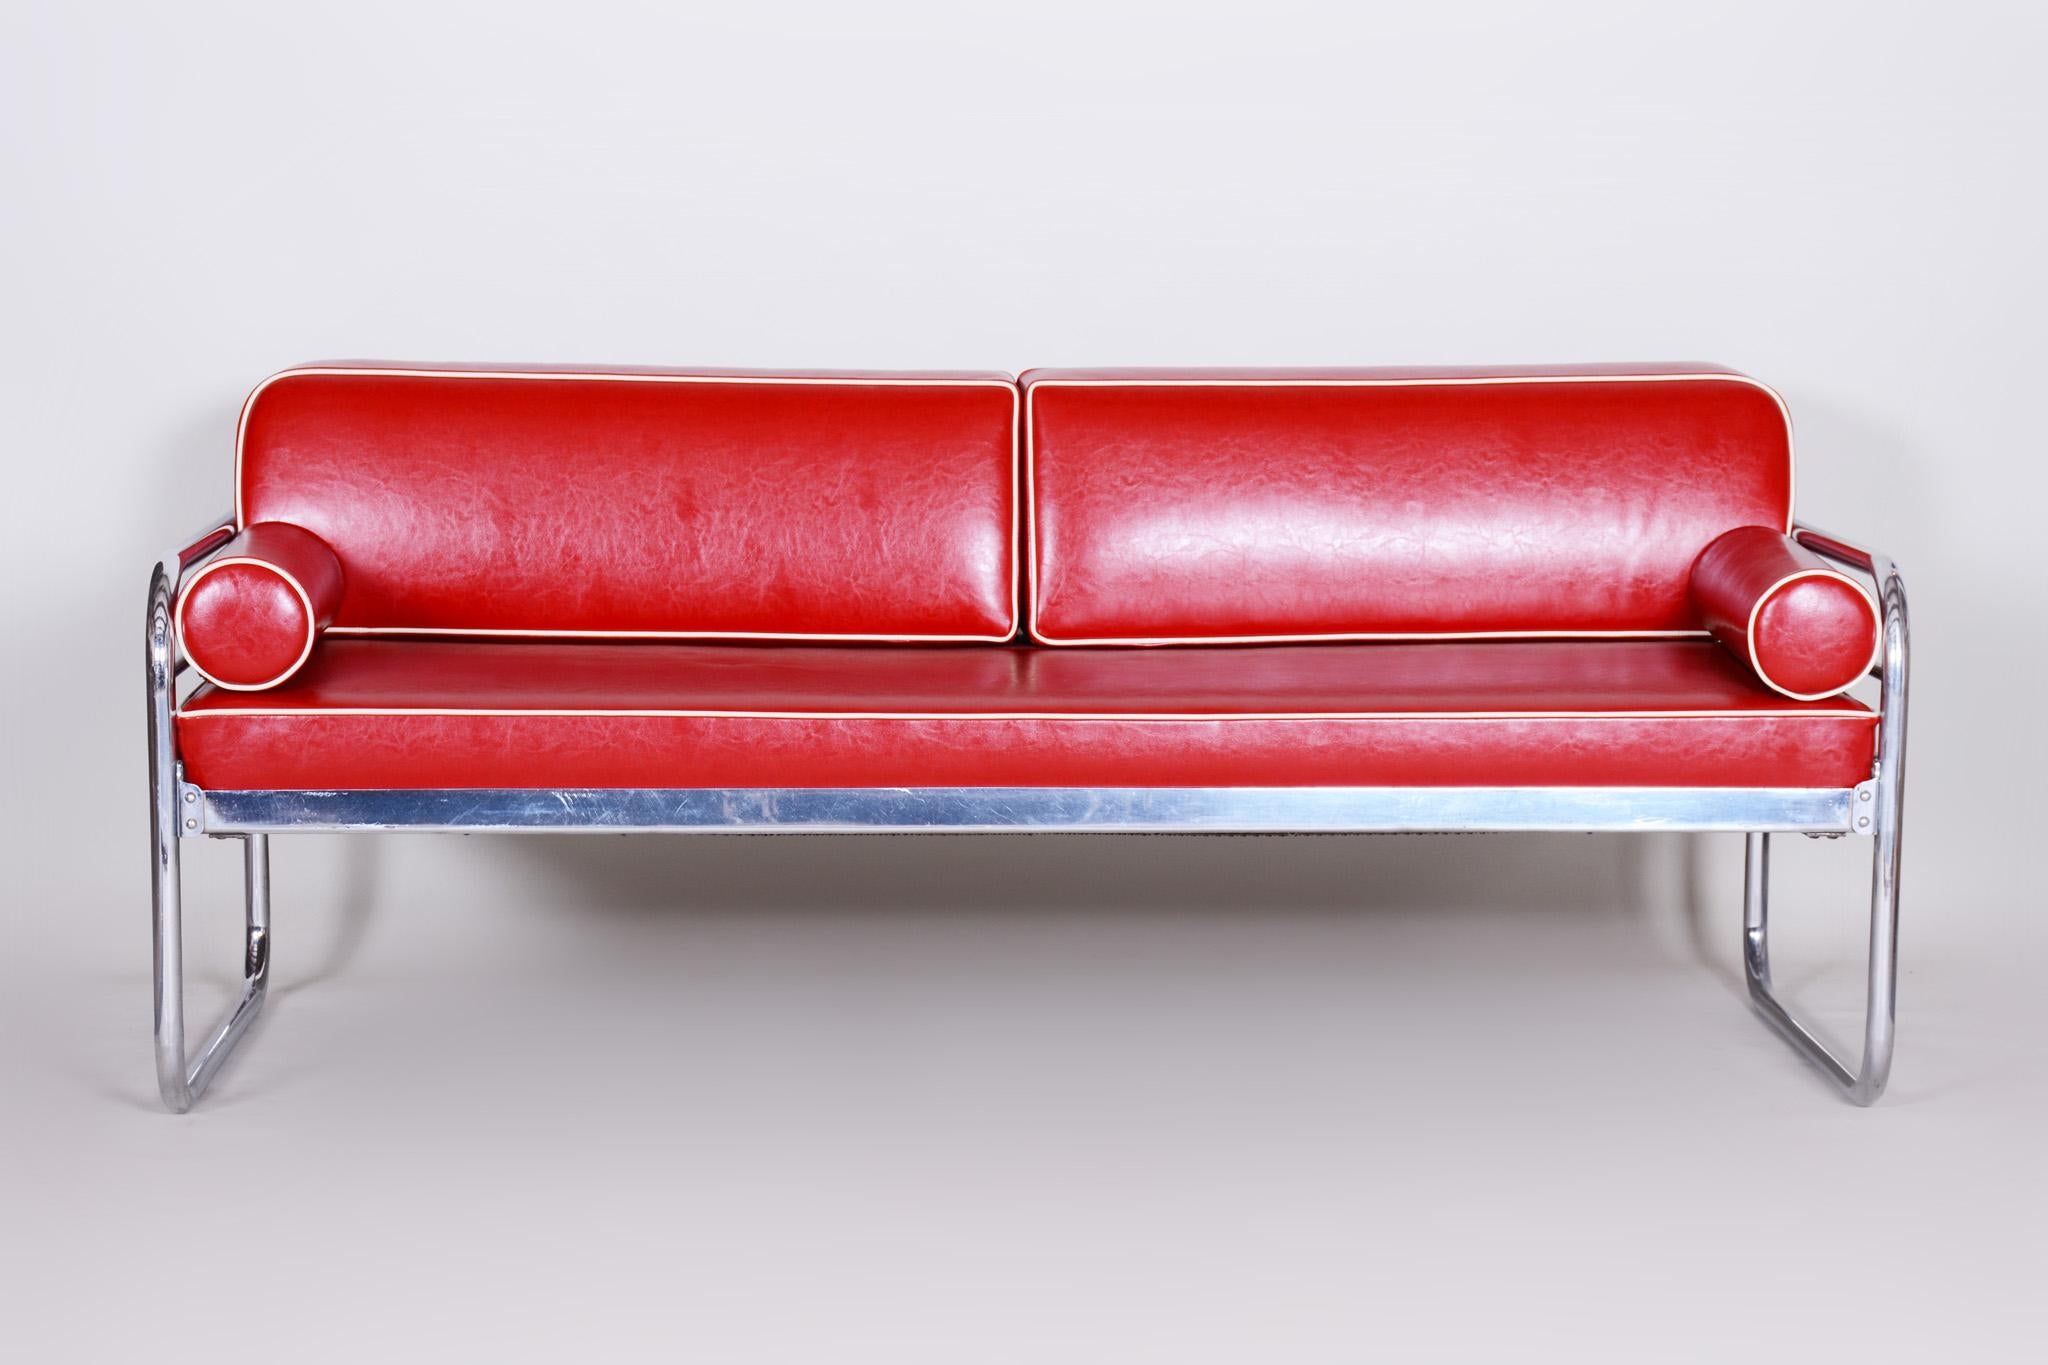 Tschechisches Bauhaus-Sofa aus Chromrotem röhrenförmigem Chrom von Hynek Gottwald, neu gepolstert, 1930er Jahre (20. Jahrhundert) im Angebot